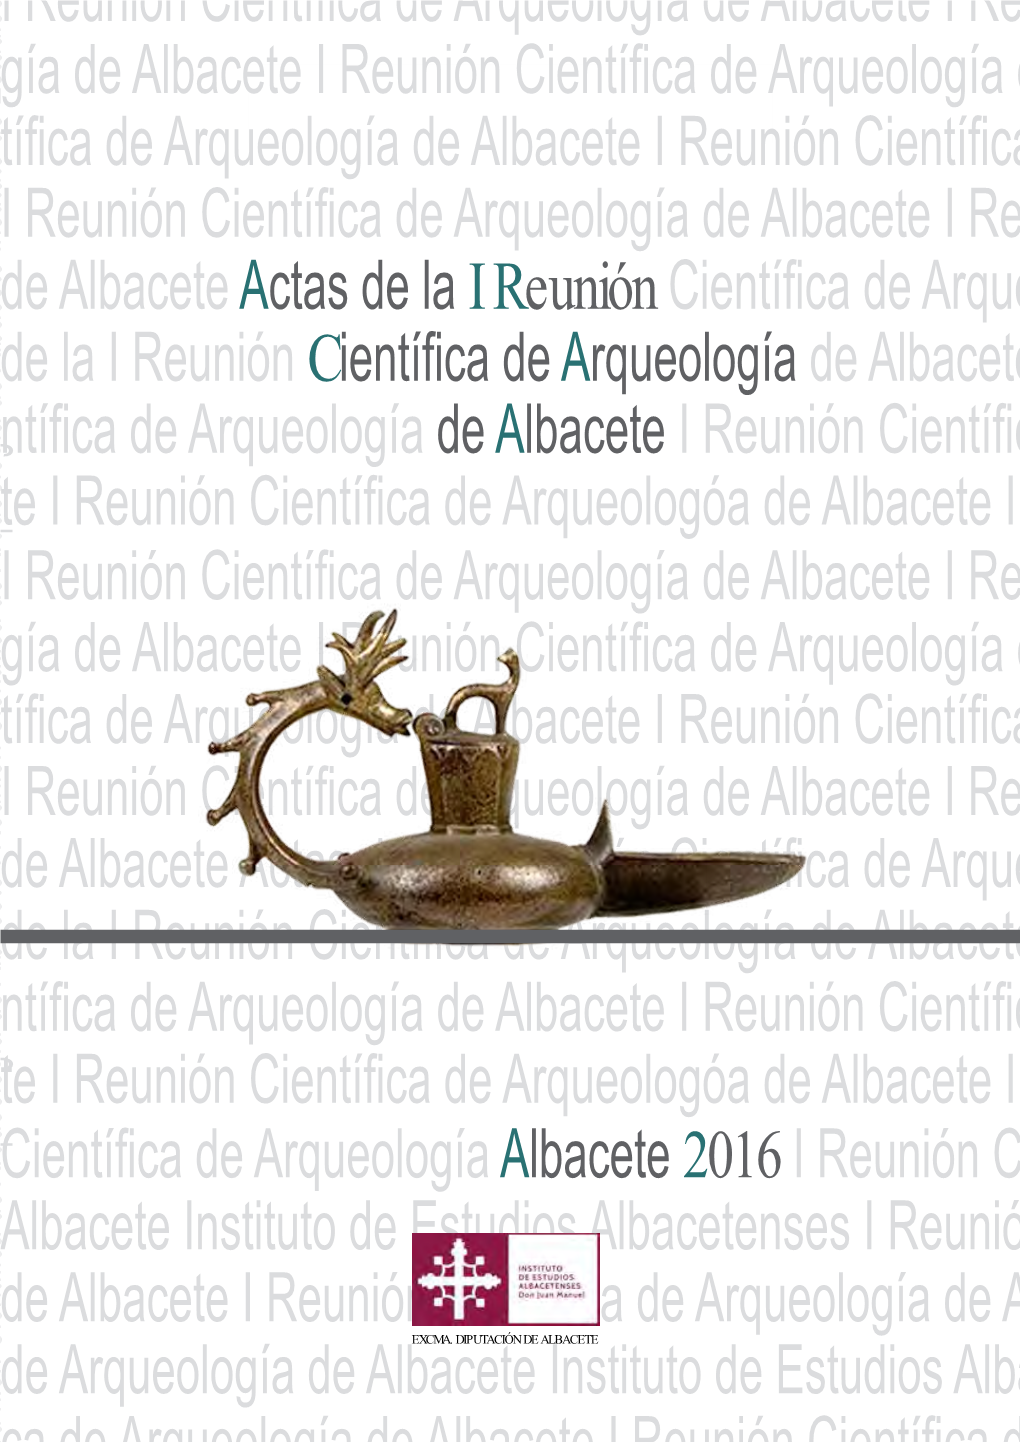 Gía De Albacete I Reunión Científica De Arqueología De Albacete I Reun